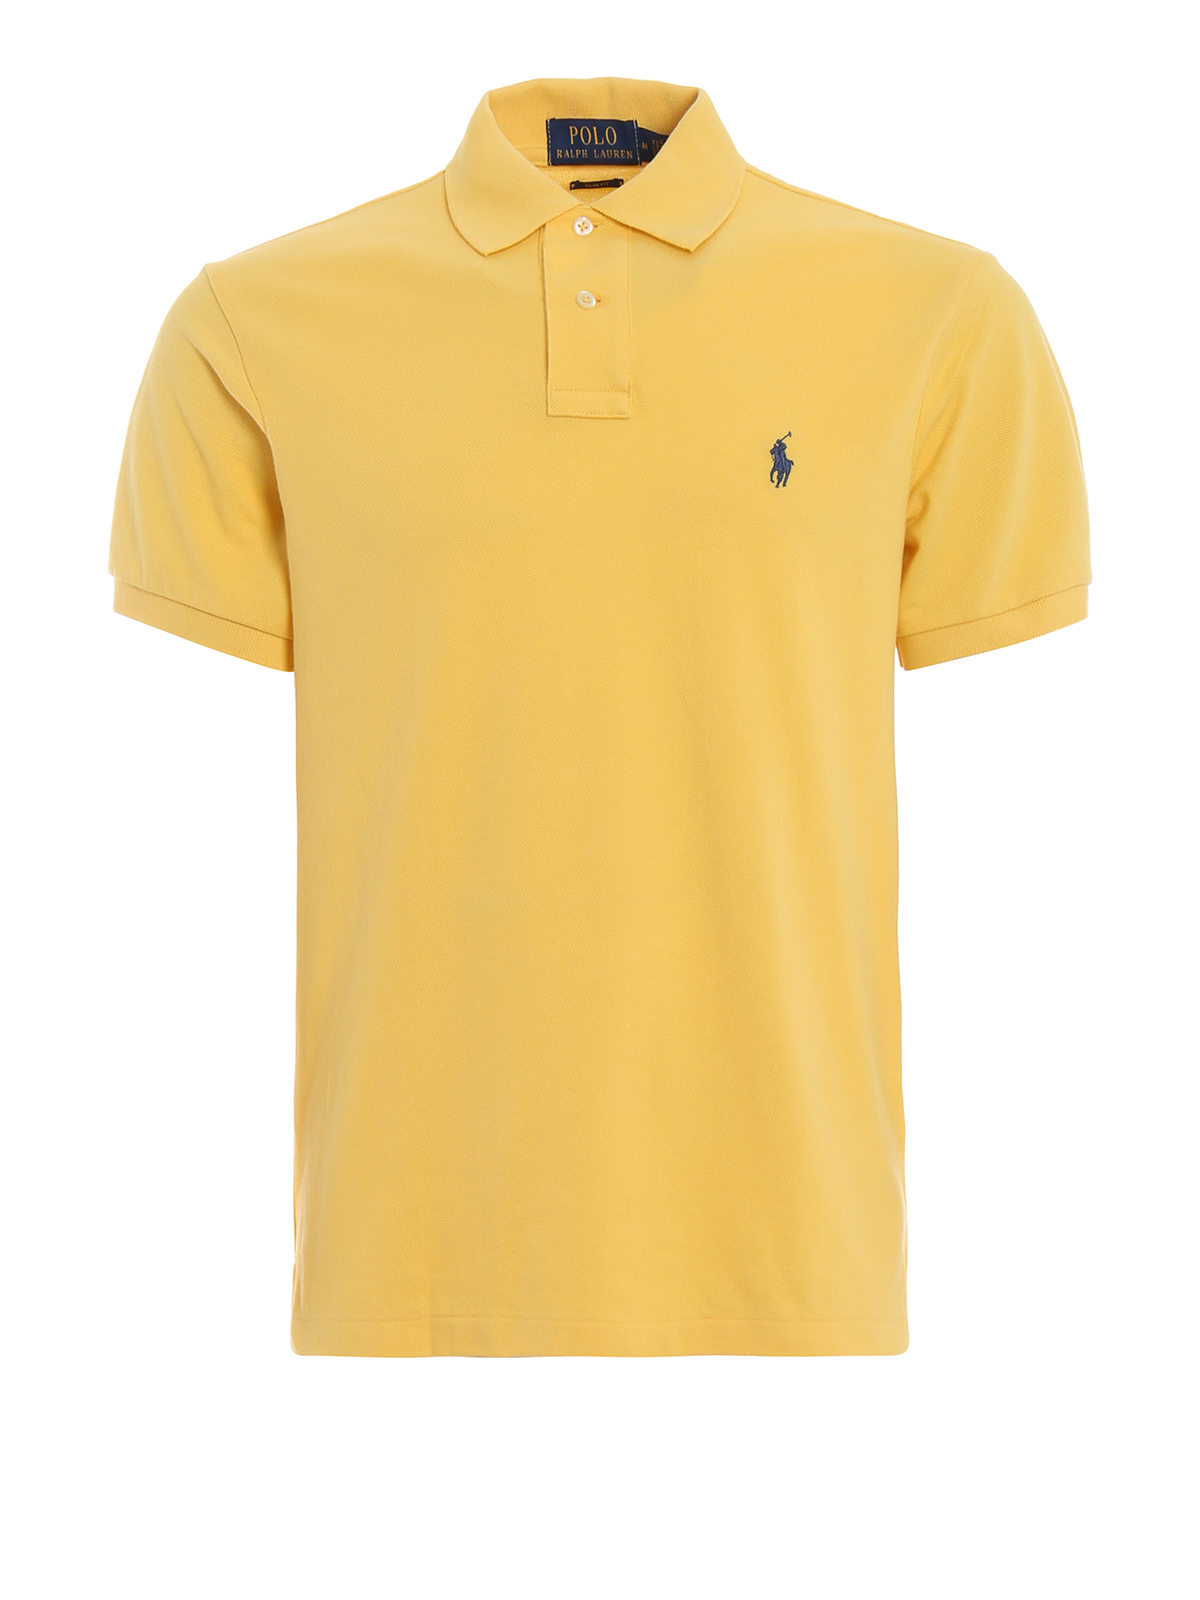 Polo shirts Polo Ralph Lauren - Classic yellow polo shirt in pique cotton -  710536856068